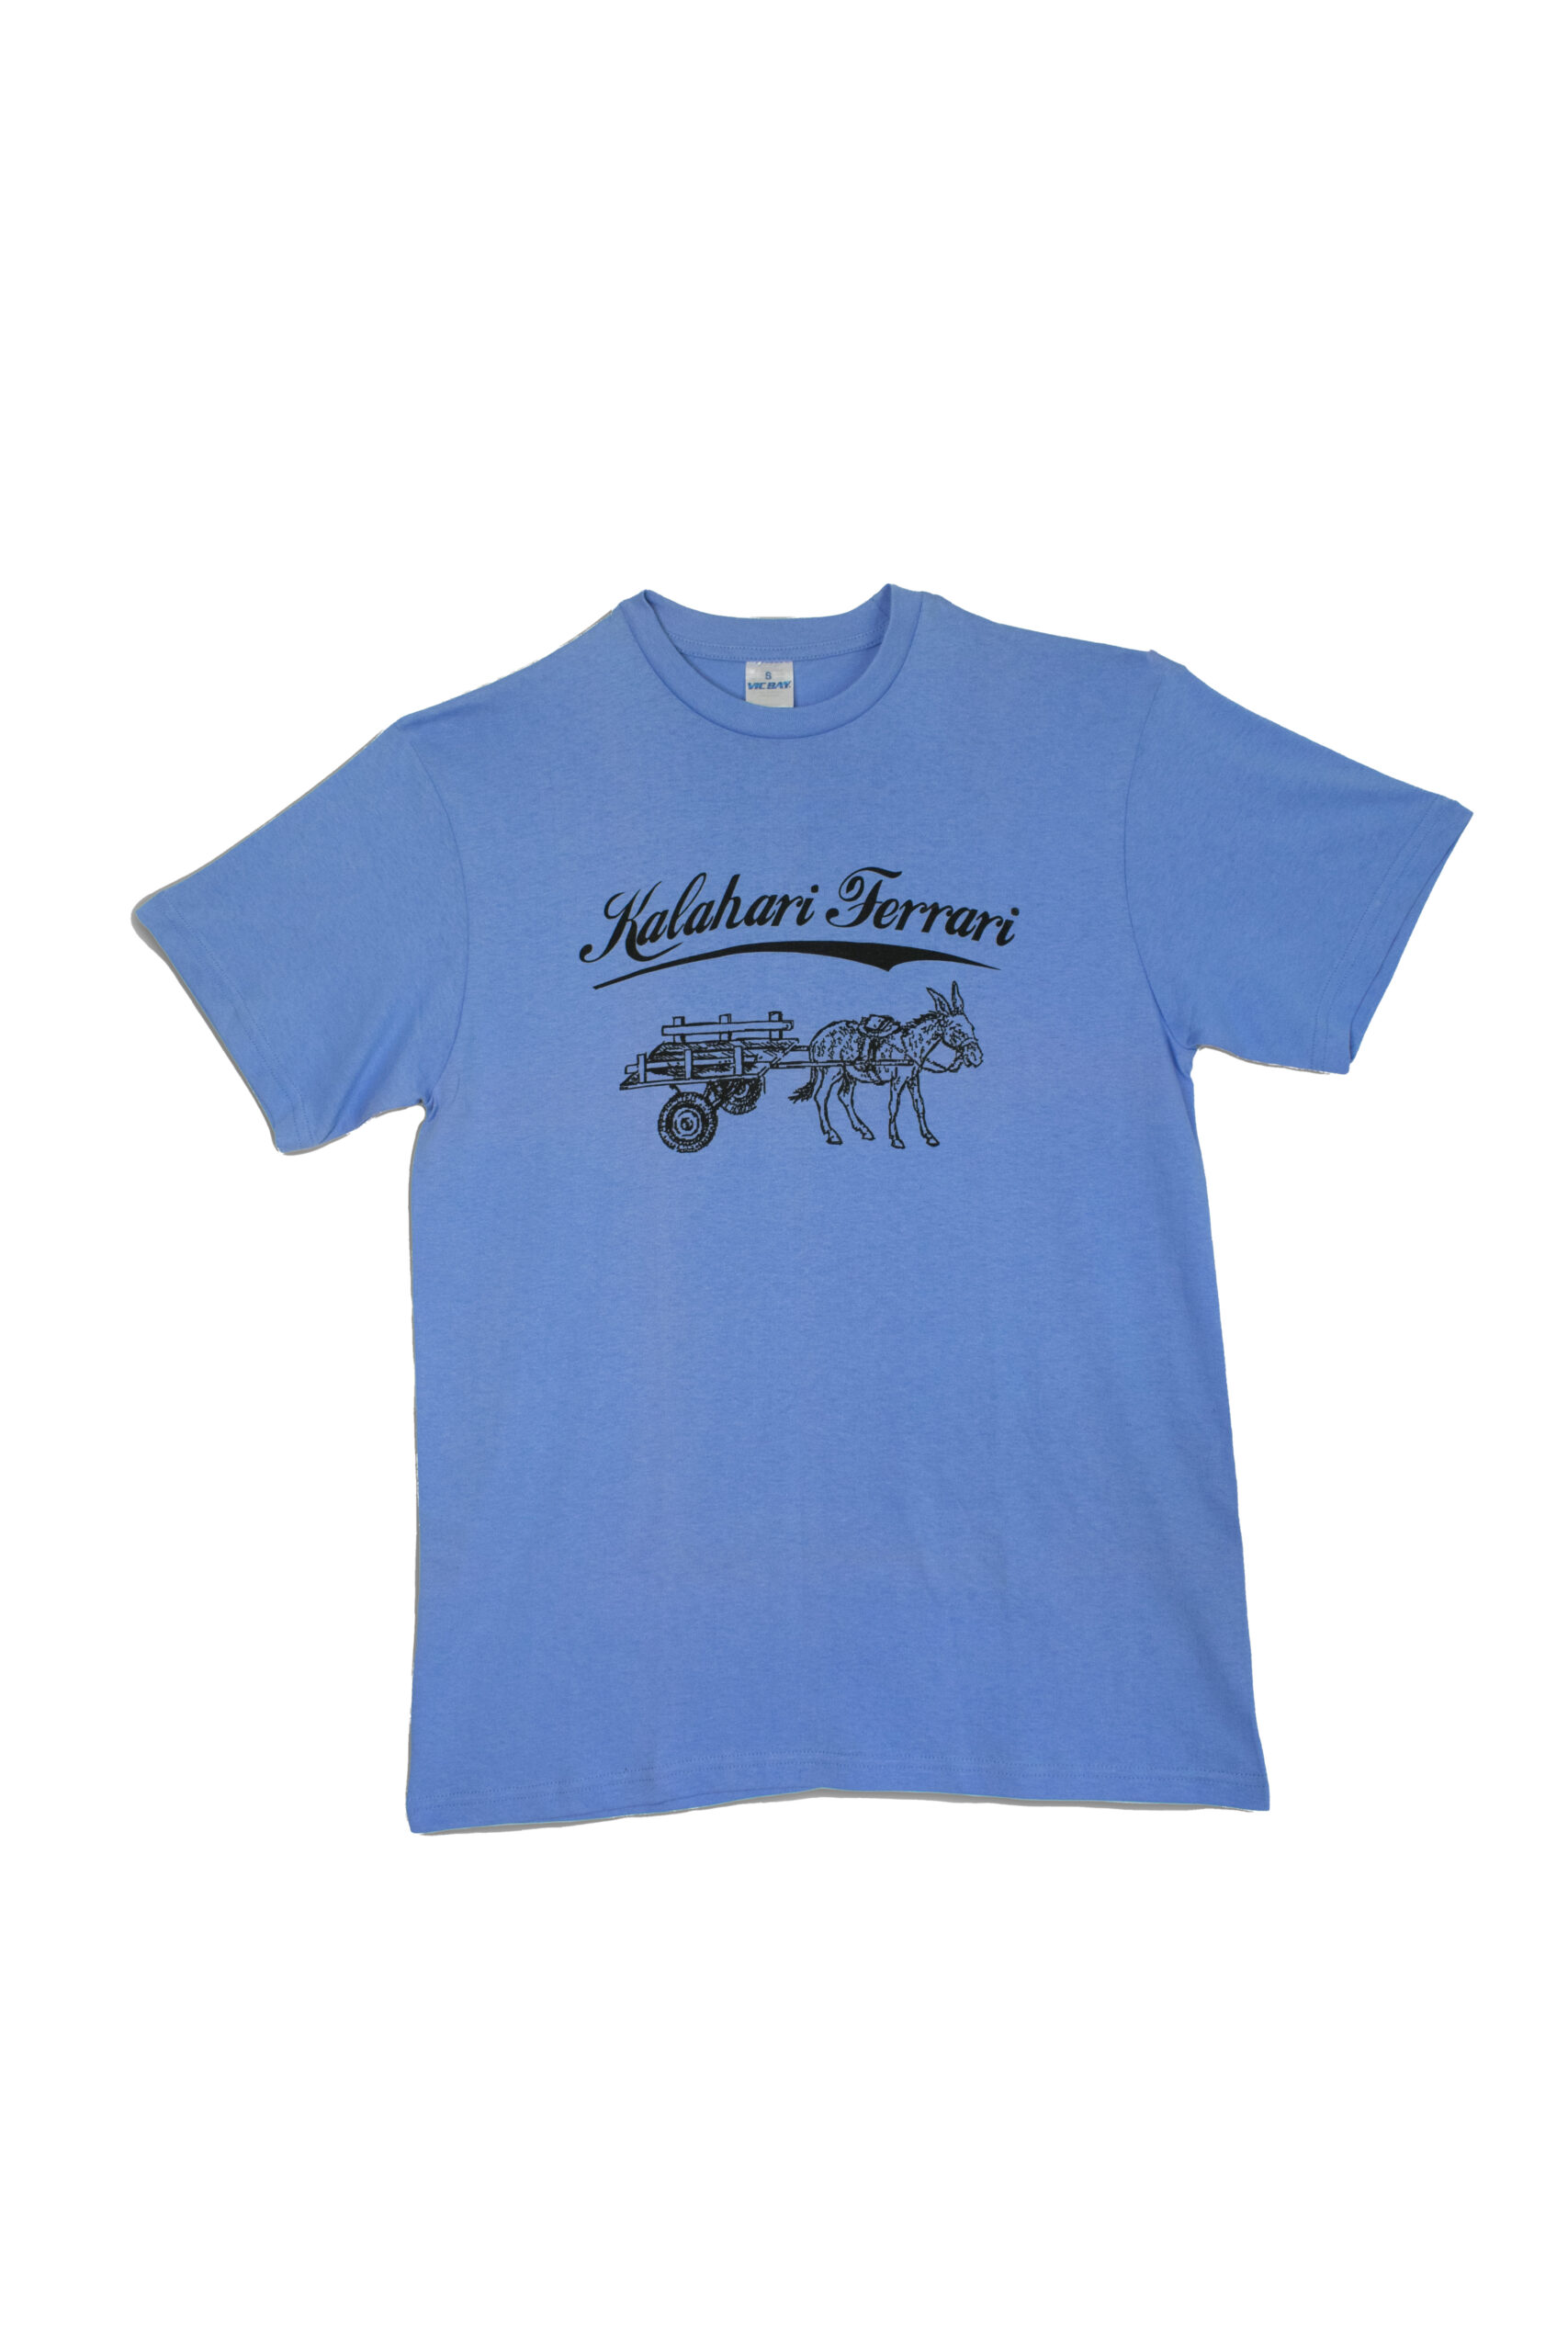 T-Shirt (Round Neck) Kalahari Ferrari - Big John Online Clothing Company